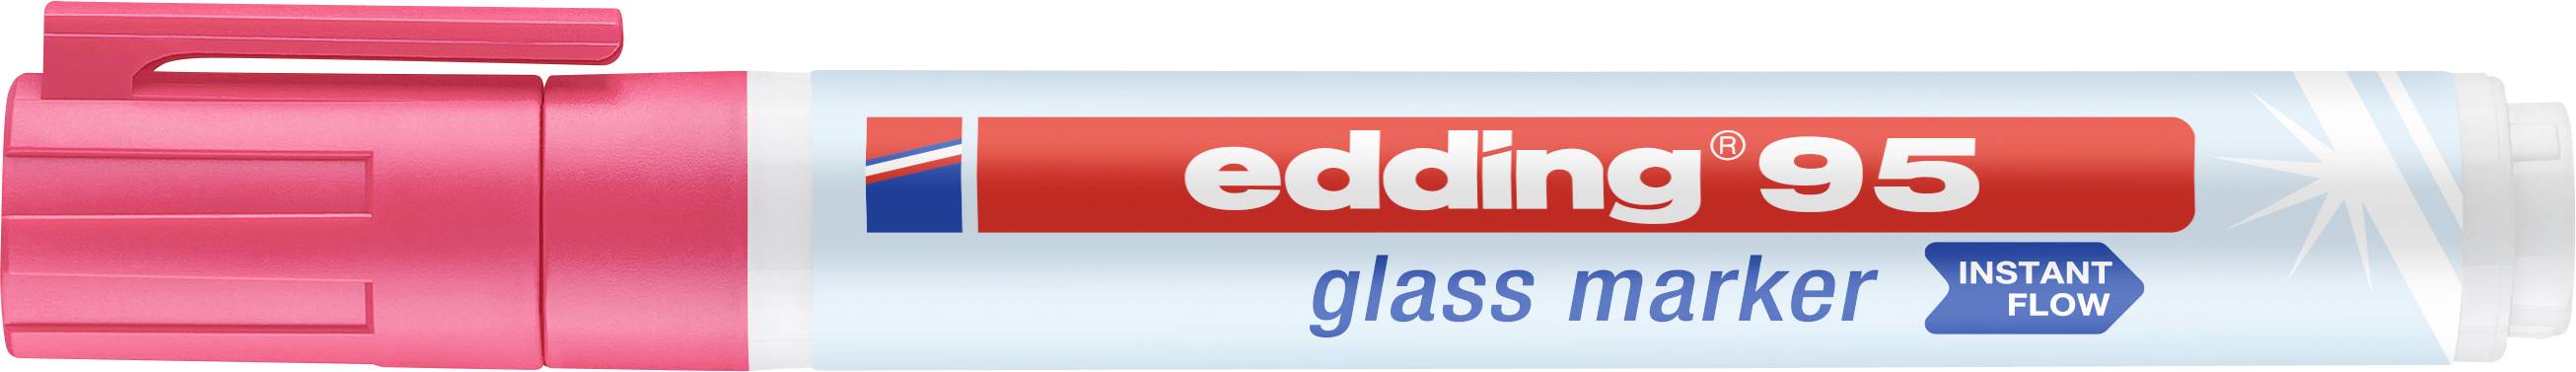 EDDING Glasboard-Marker 95 pink 1.5-3mm Rundspitze trocken abwischbar (4-95009)